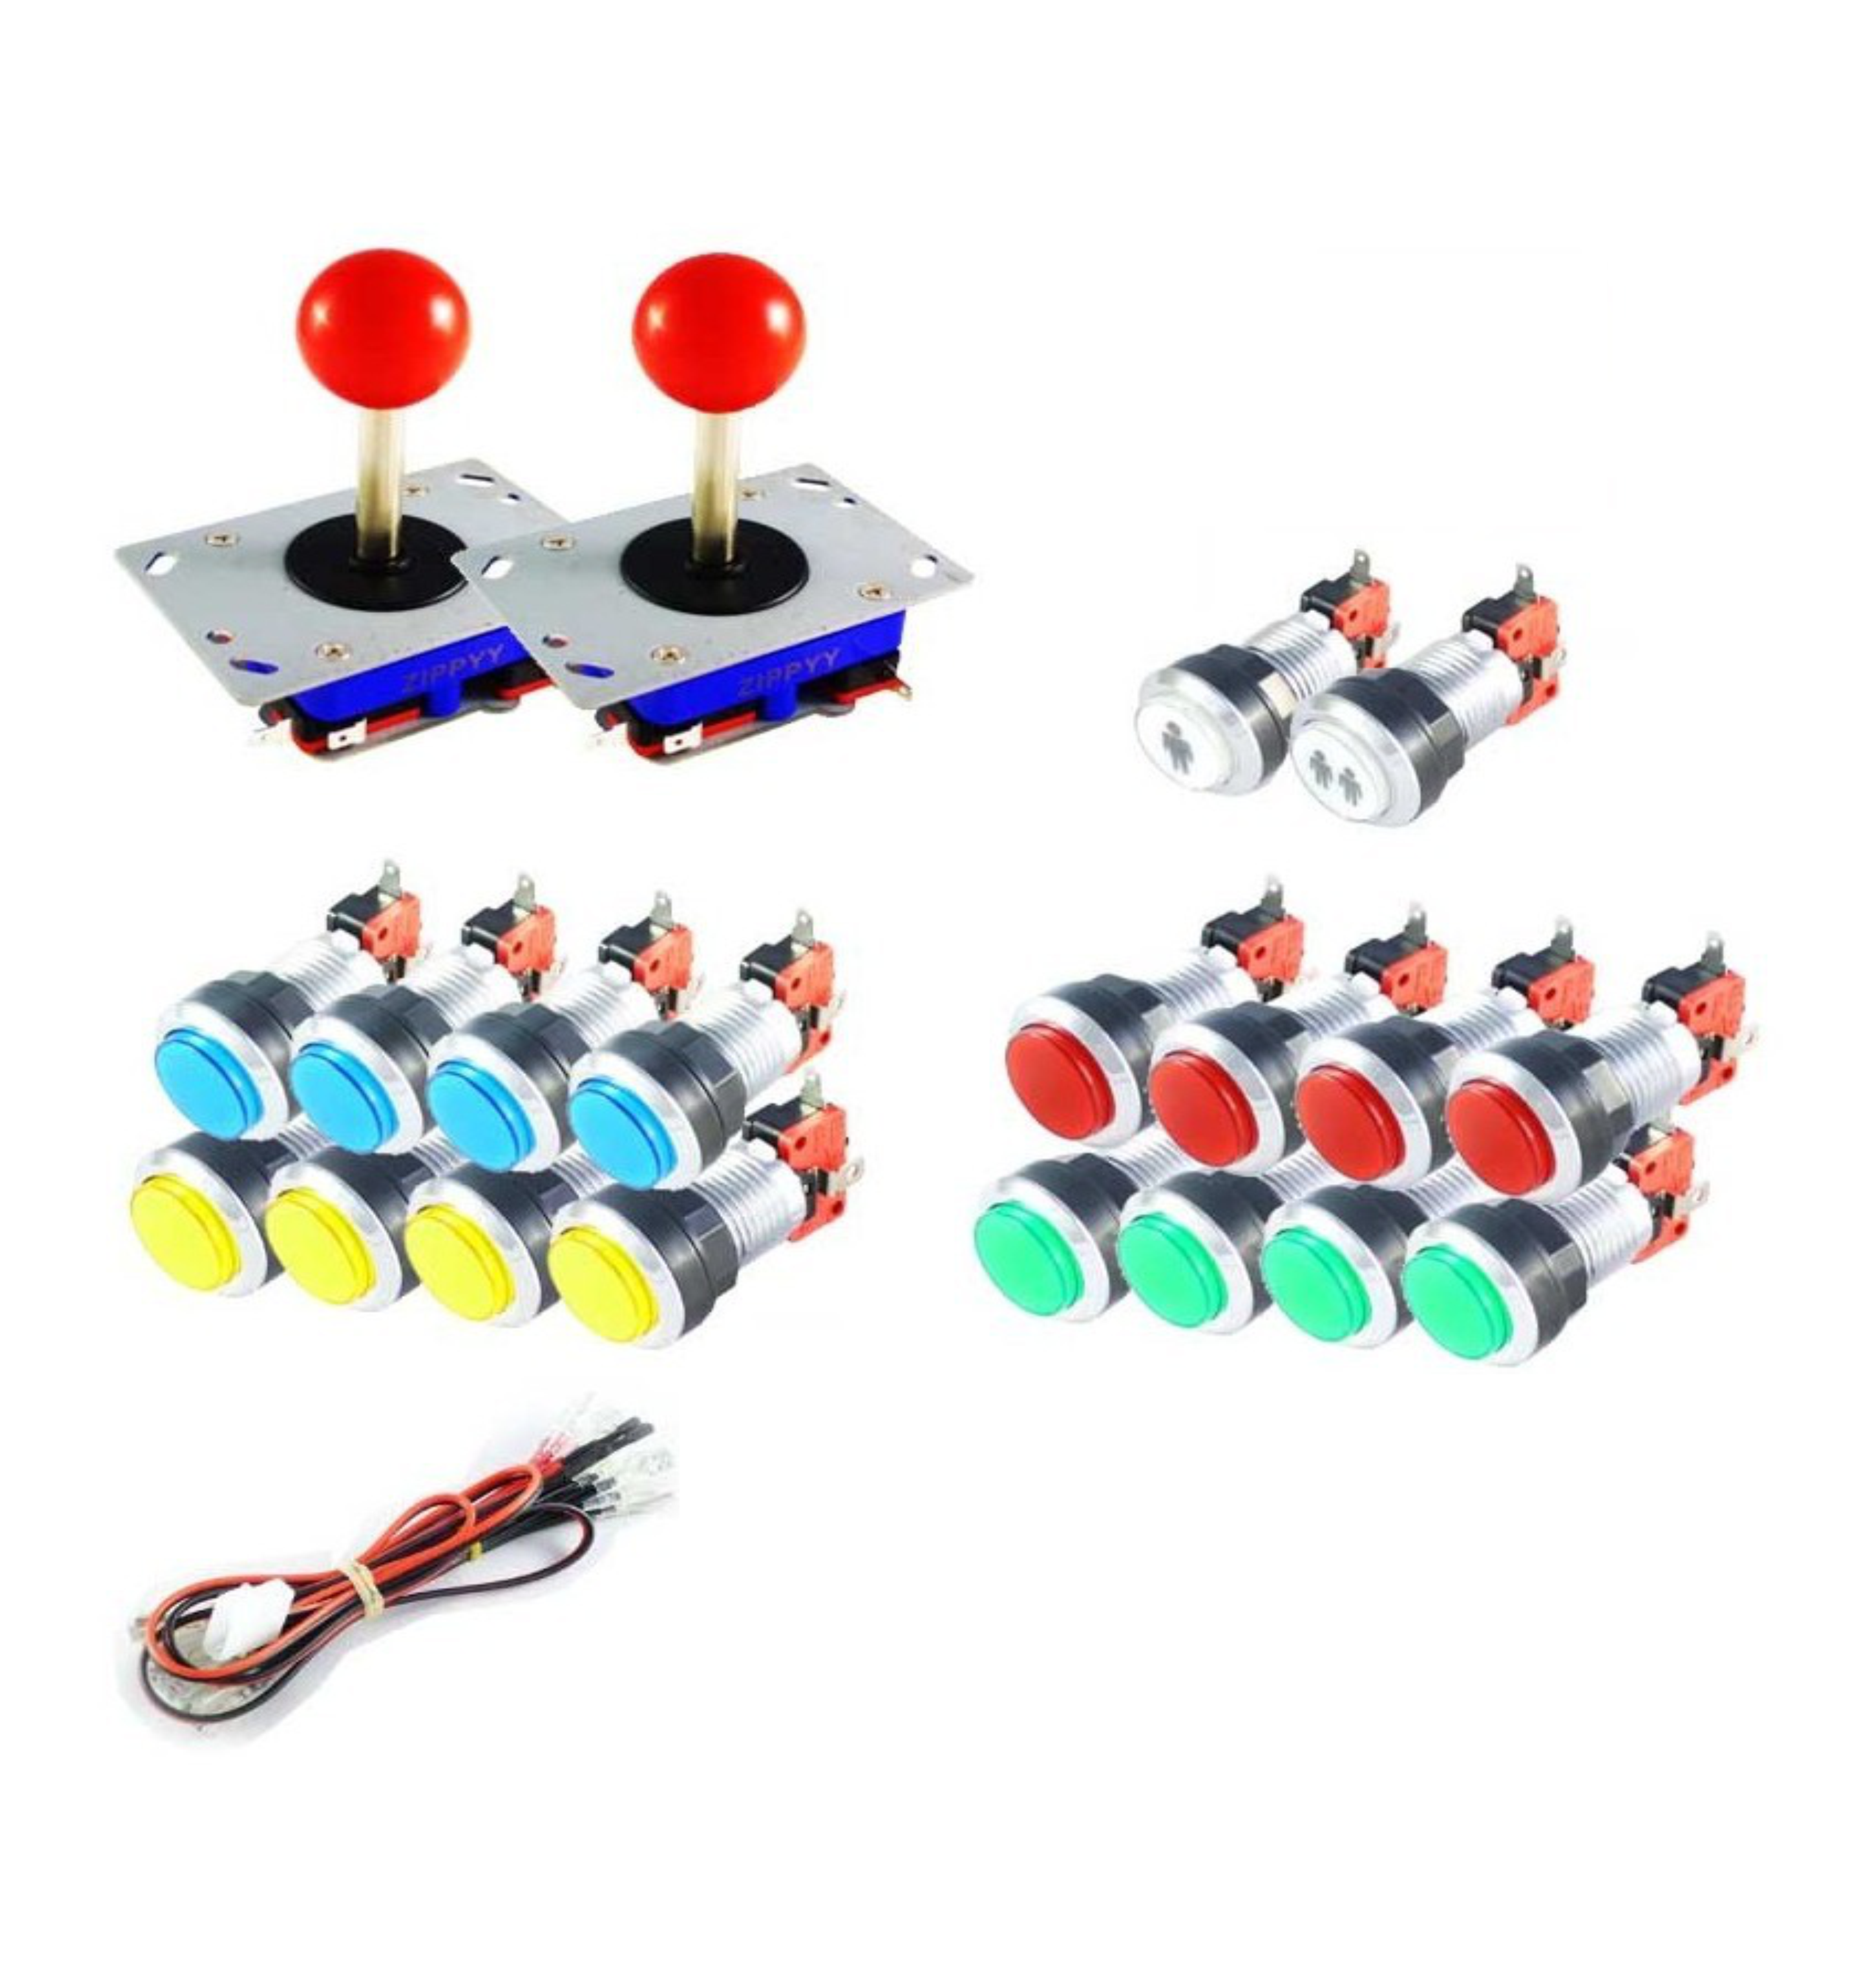 Kit Joysticks Lumineux Arcade 2 Joueurs boutons lumineux  COMPLET 